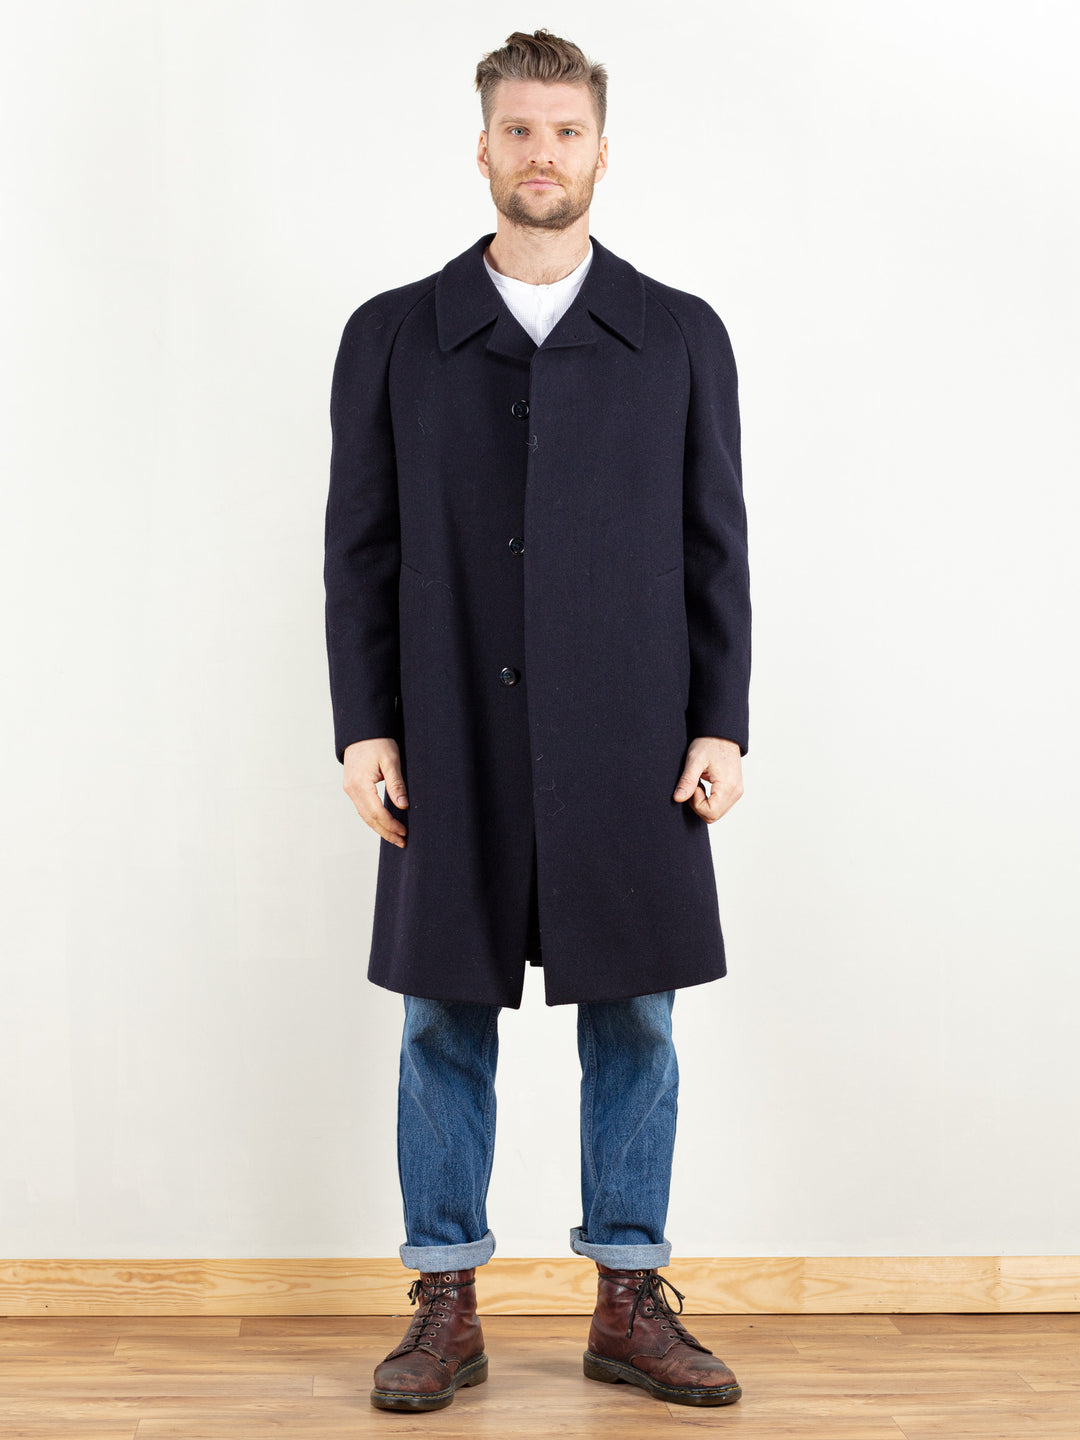 Navy Blue Wool Coat bold casual vintage 80s classic men winter overcoat mac coat warm coat men retro coat size medium